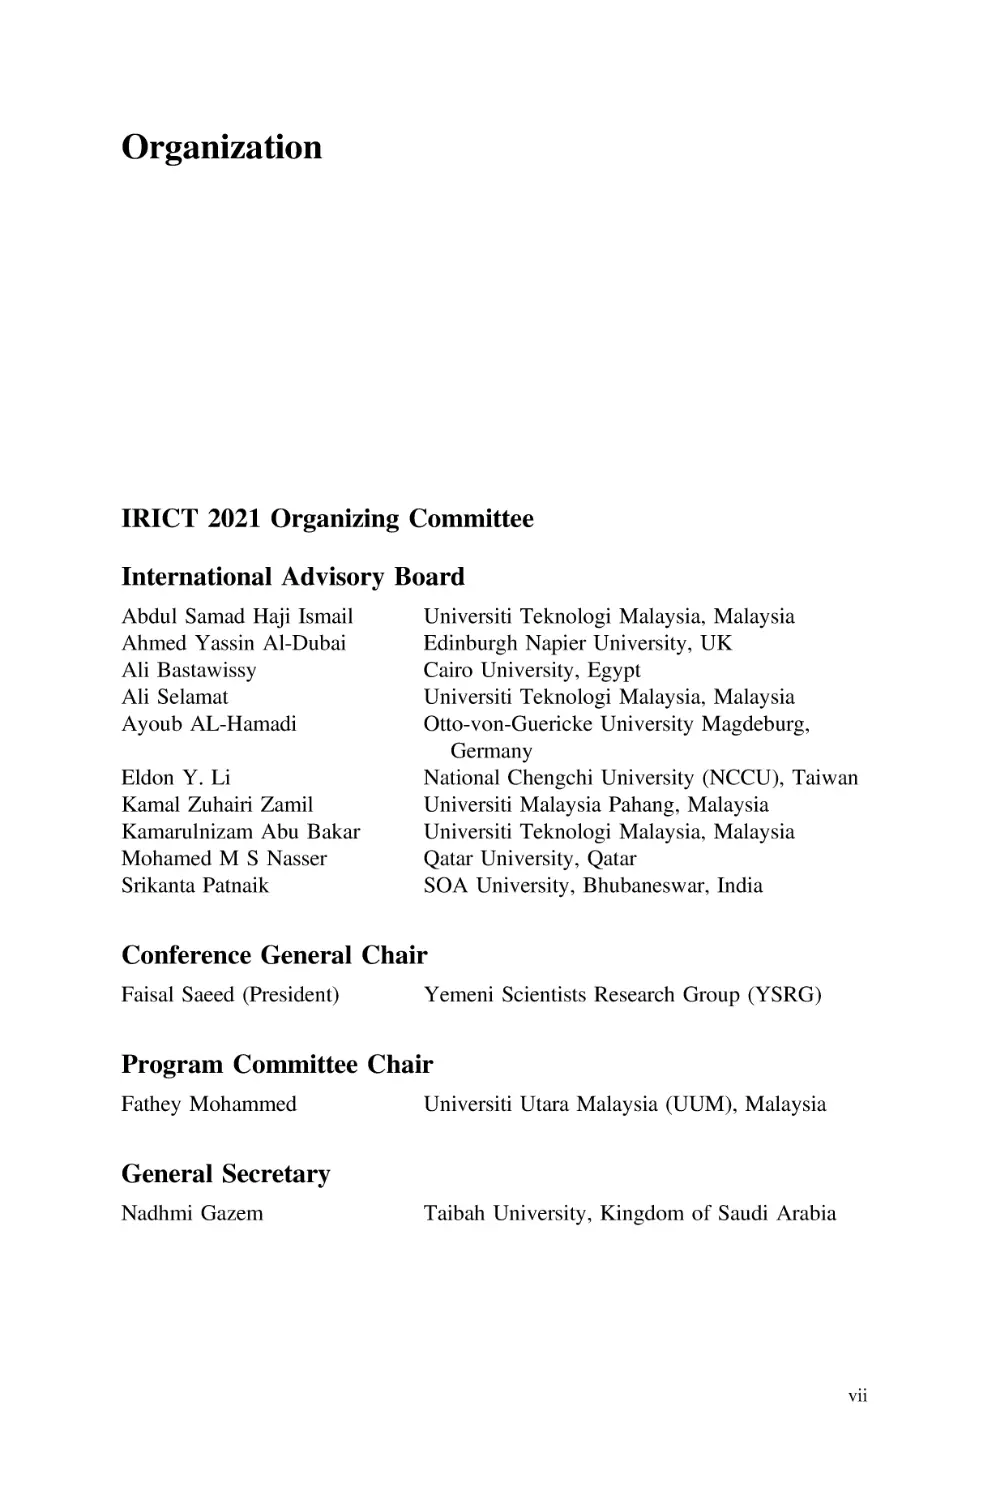 Organization
IRICT 2021 Organizing Committee
International Advisory Board
Conference General Chair
Program Committee Chair
General Secretary